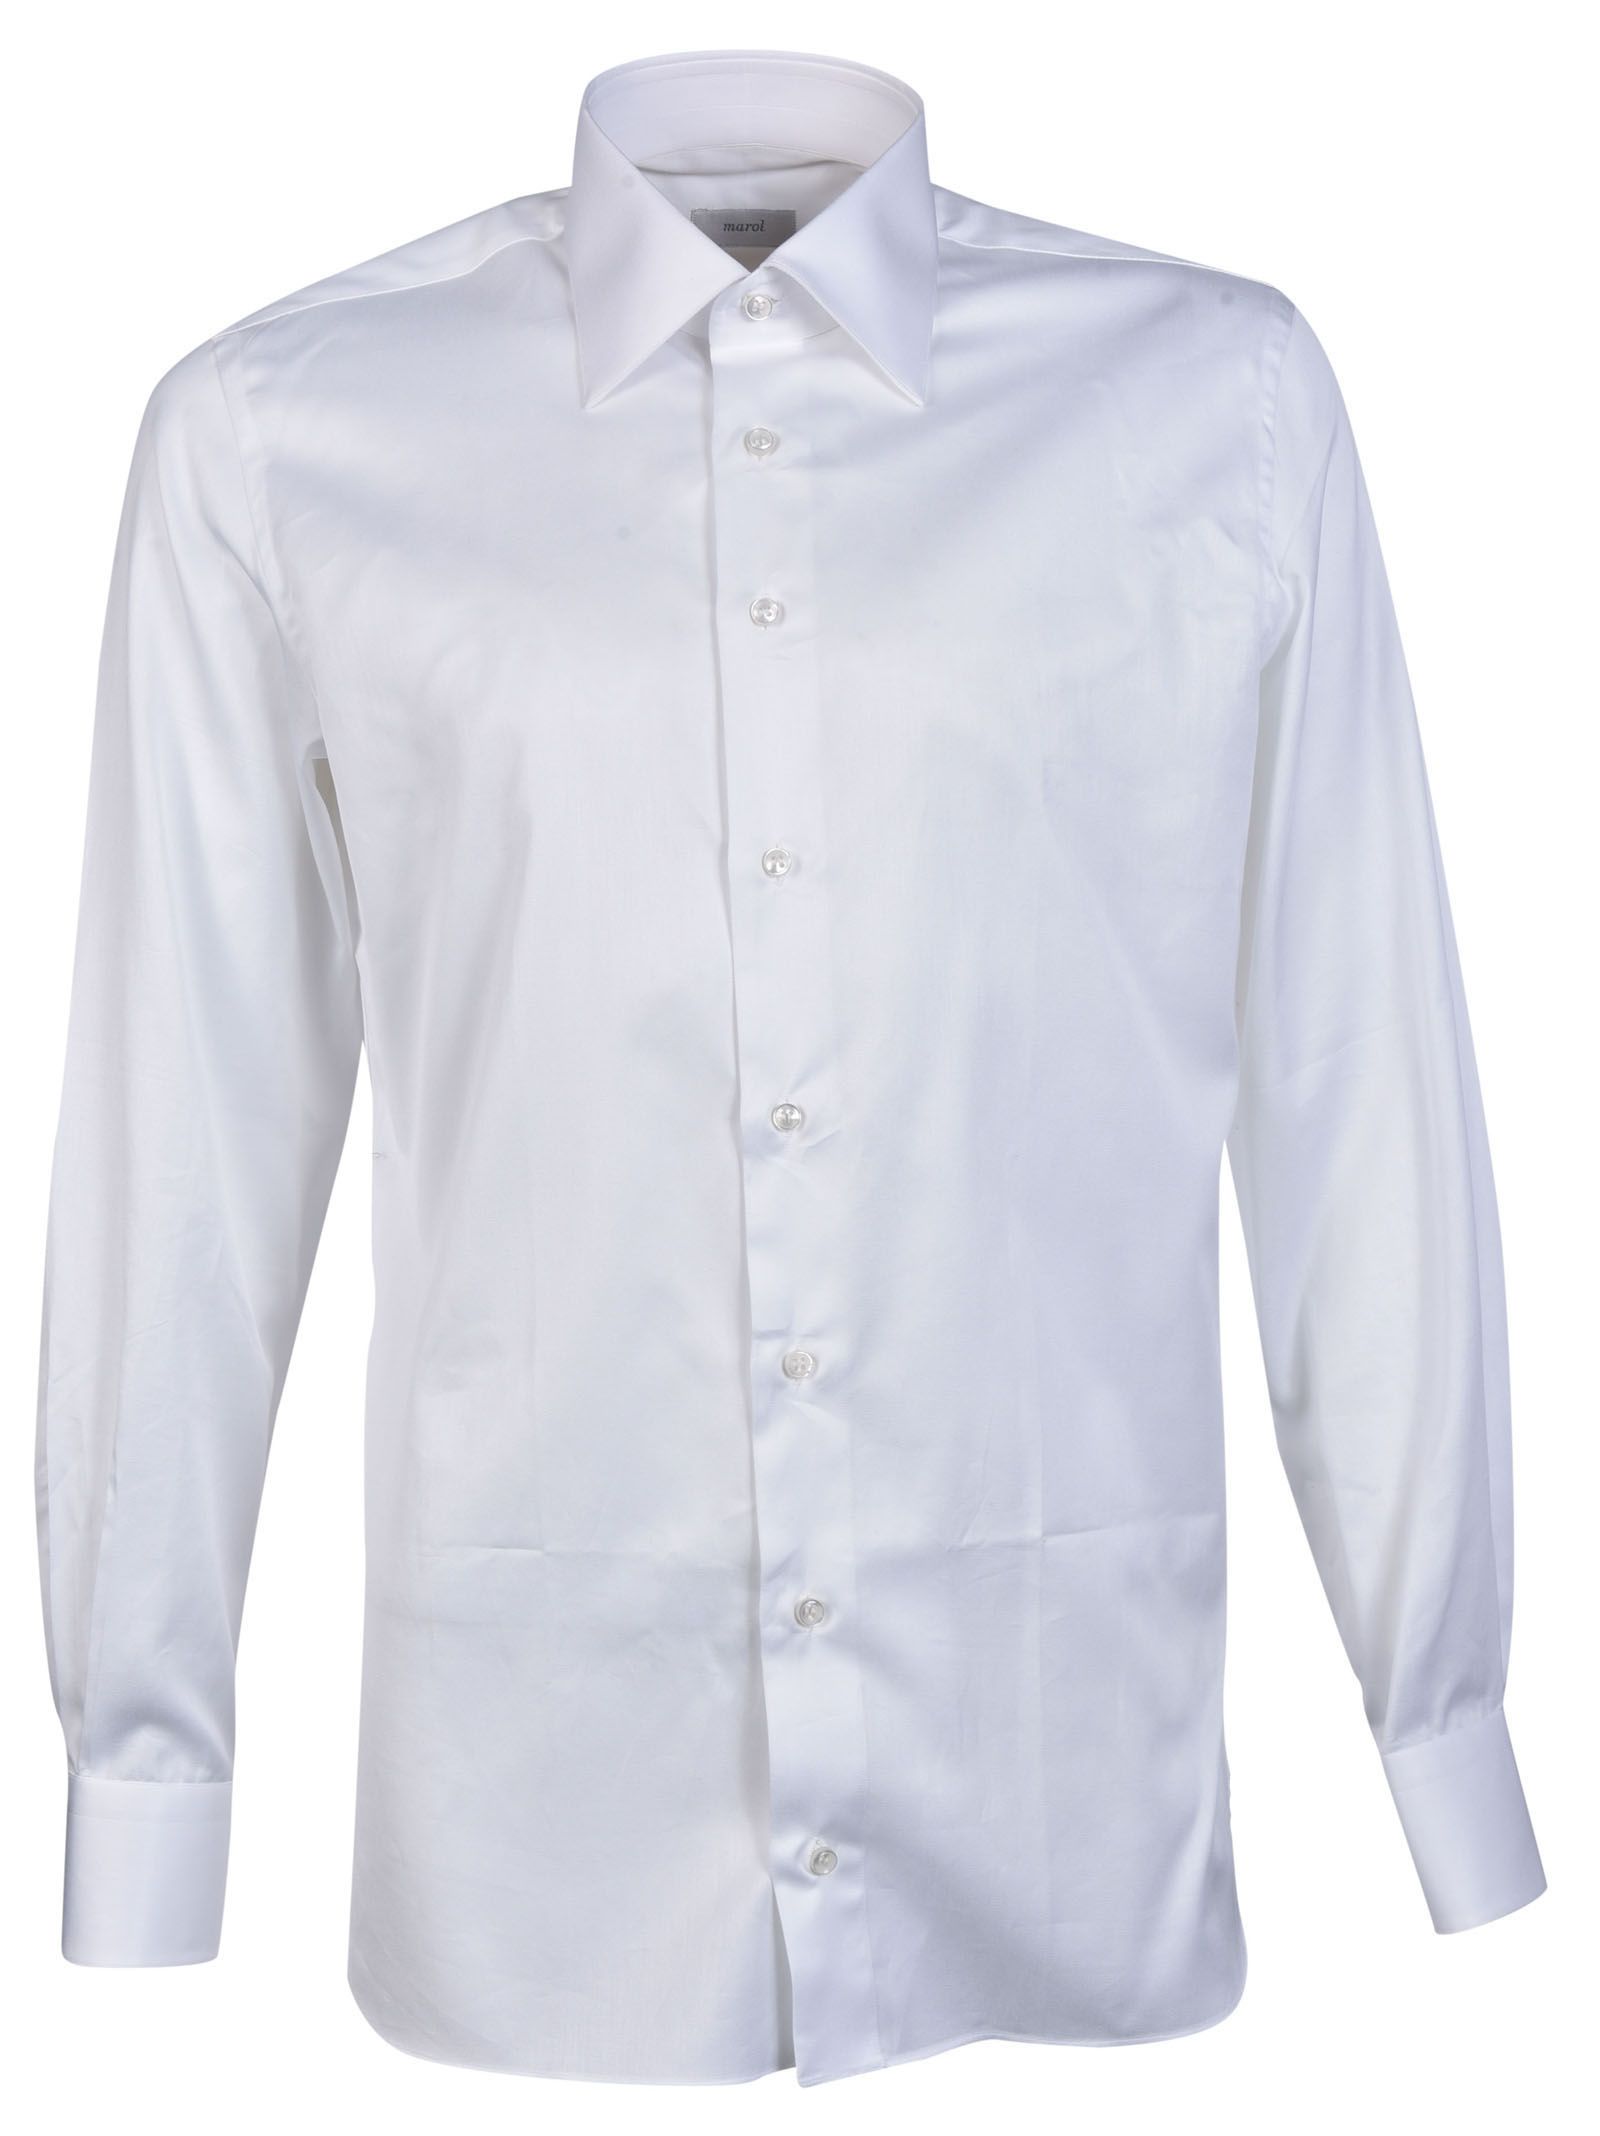 Marol - Marol Classic Shirt - White, Men's Shirts | Italist